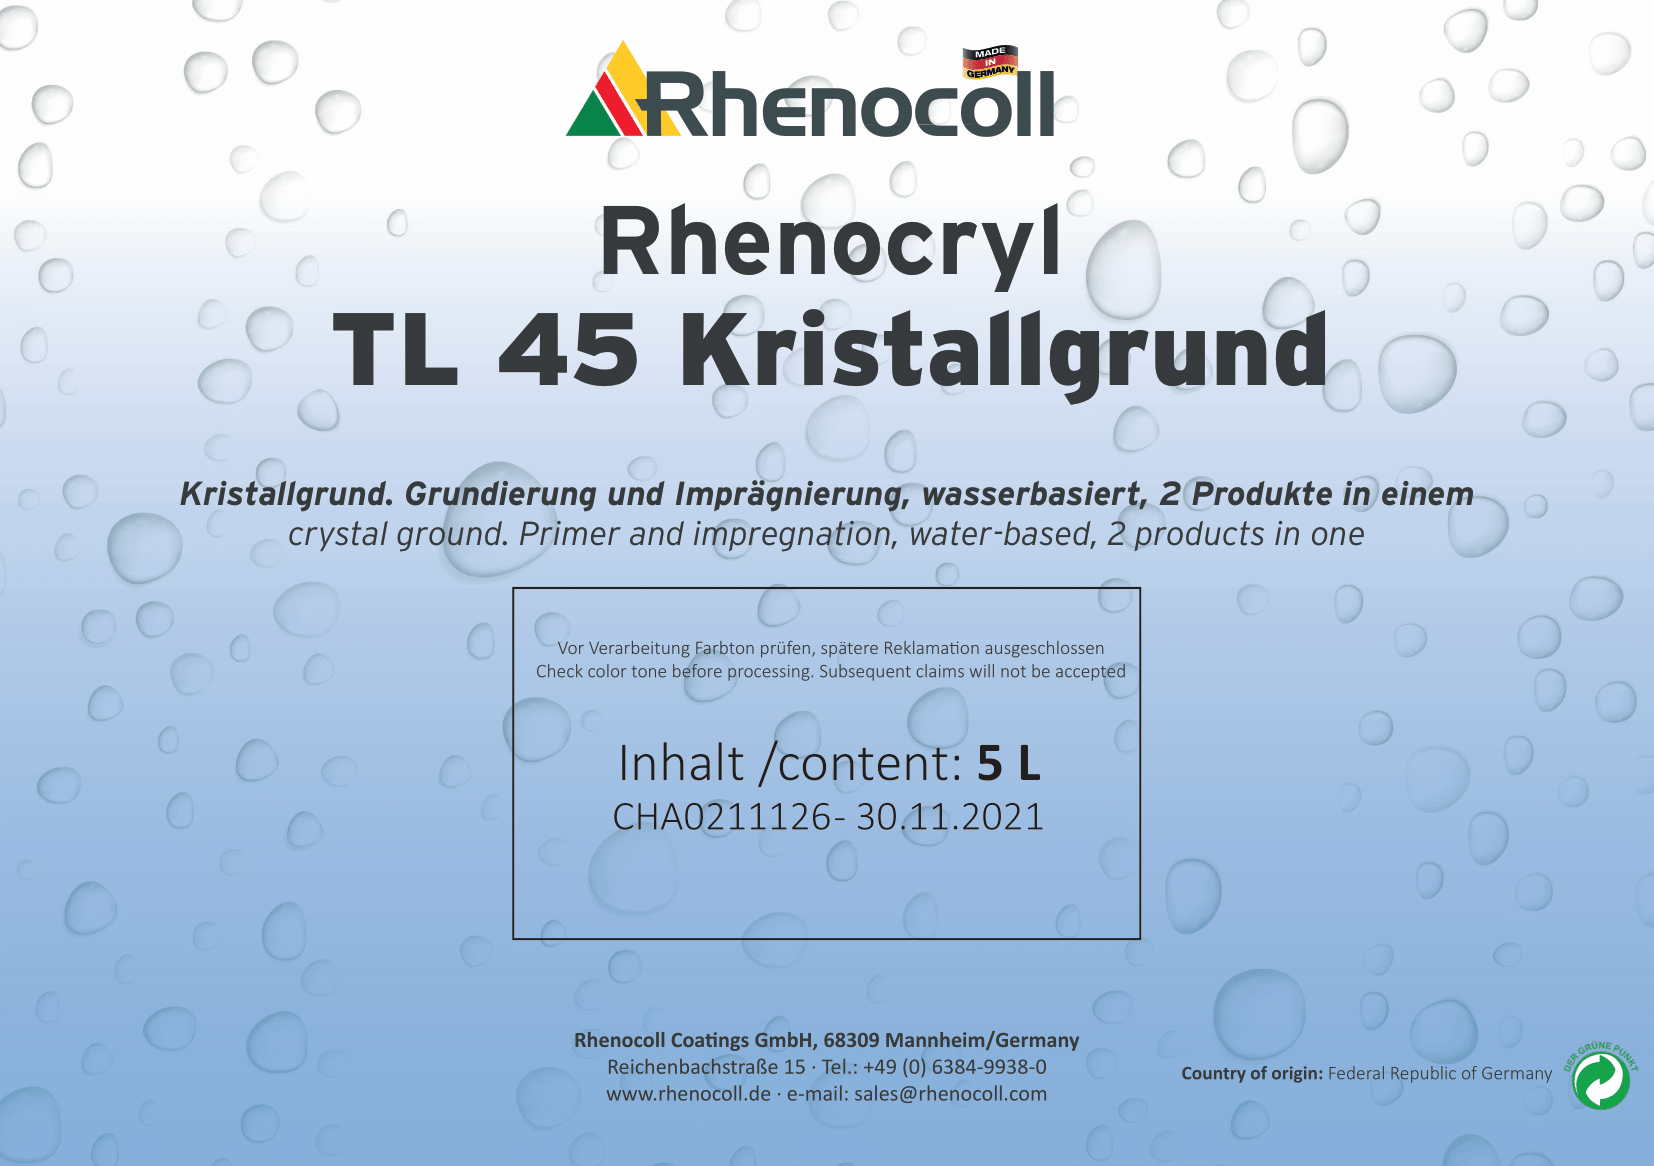 Rhenocryl TL 45 Kristallgrund